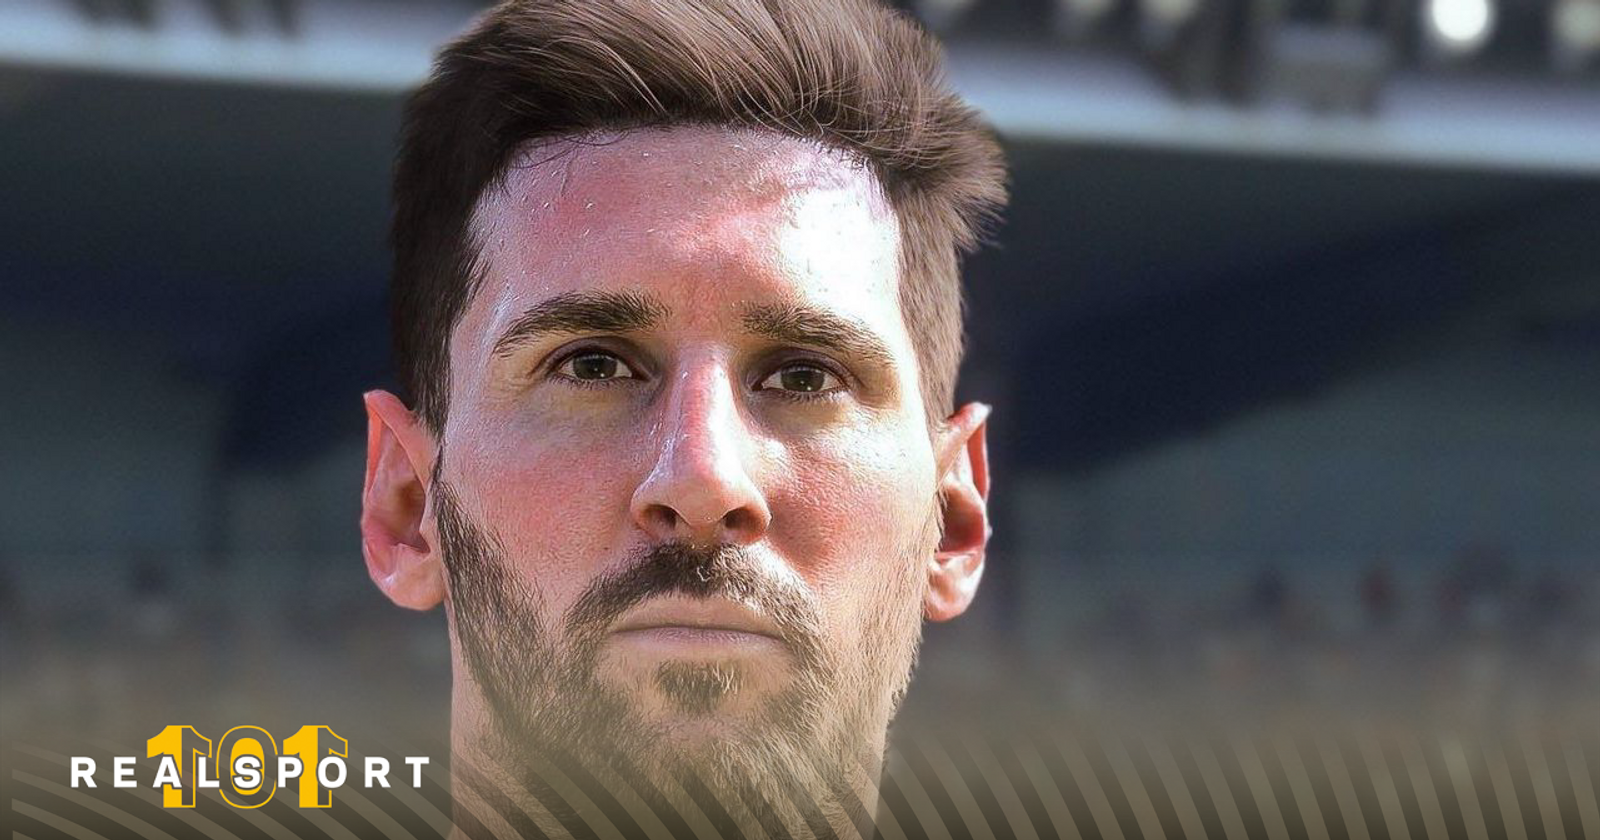 FIFA 23 leak hints at Lionel Messi Flashback SBC card arriving